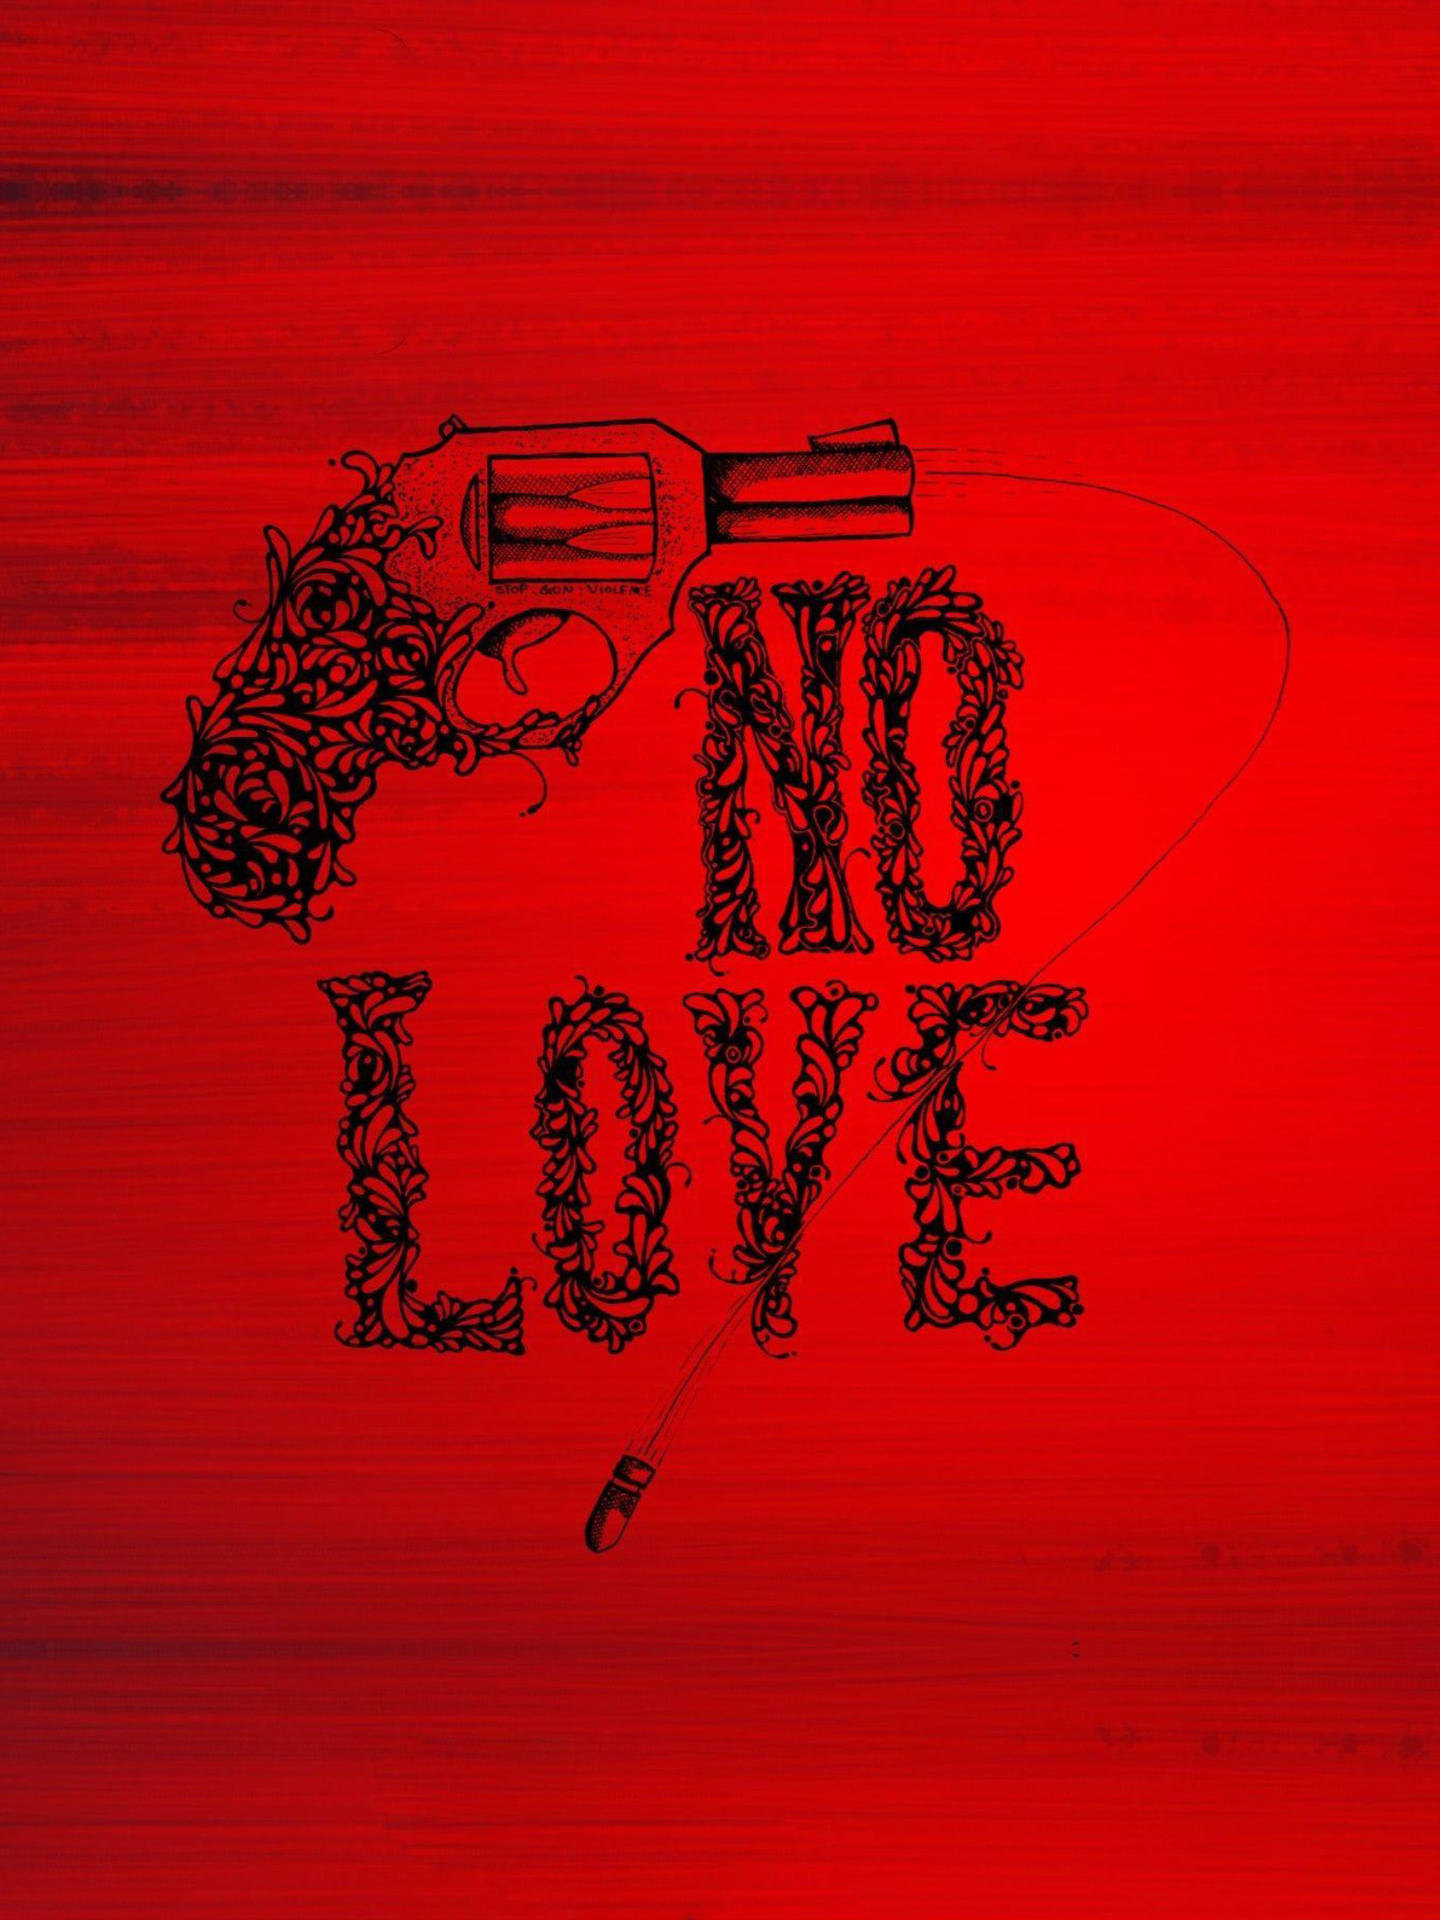 No Love With Revolver Pistol Wallpaper